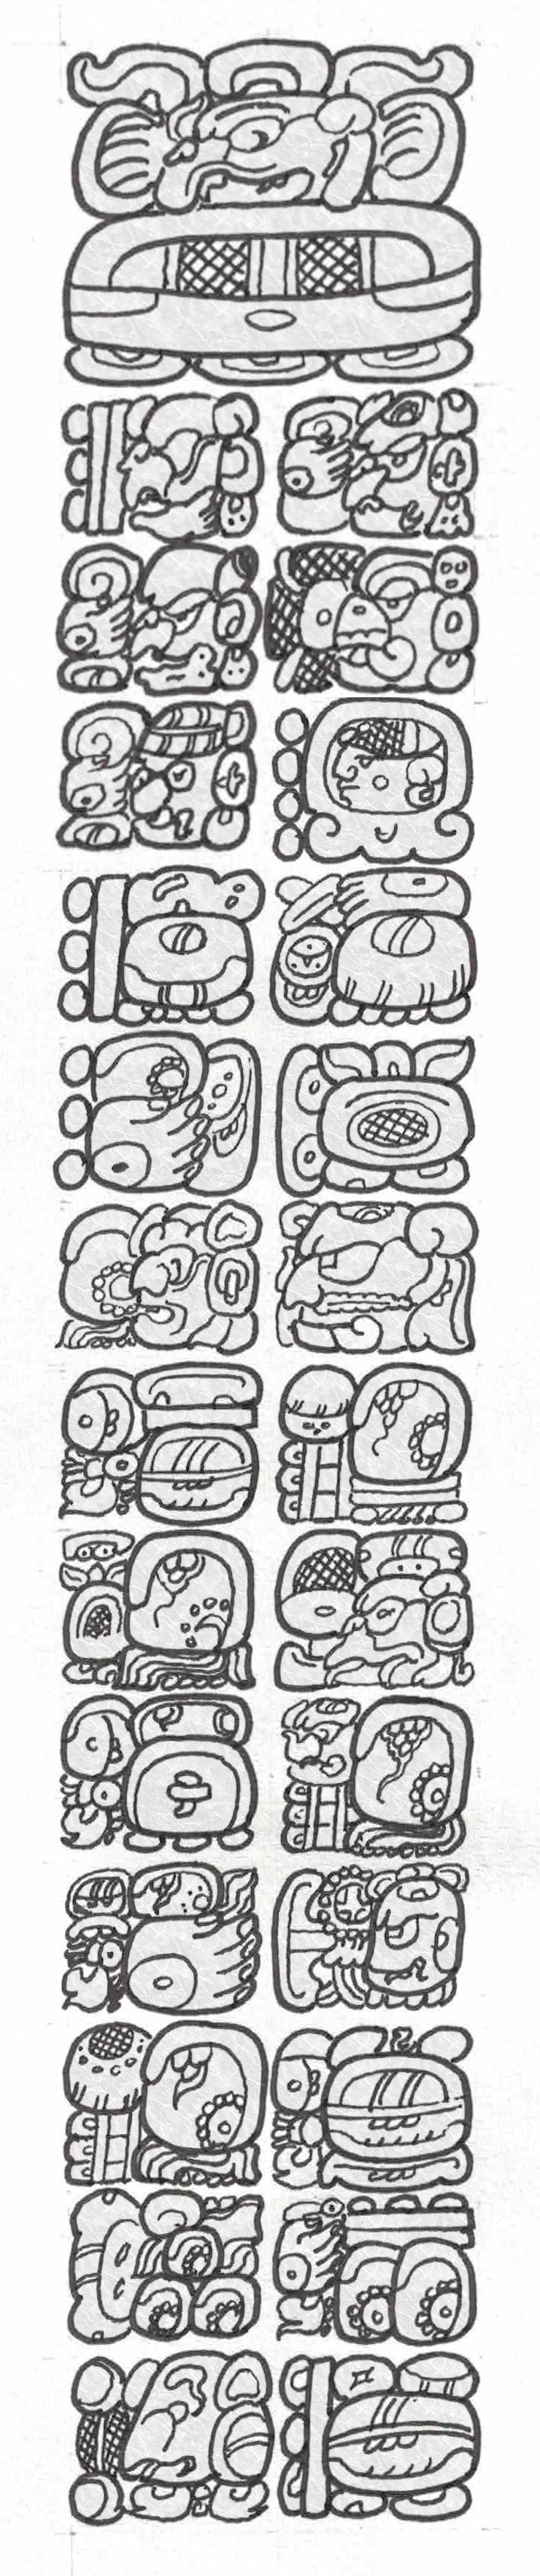 Series of hieroglyphics